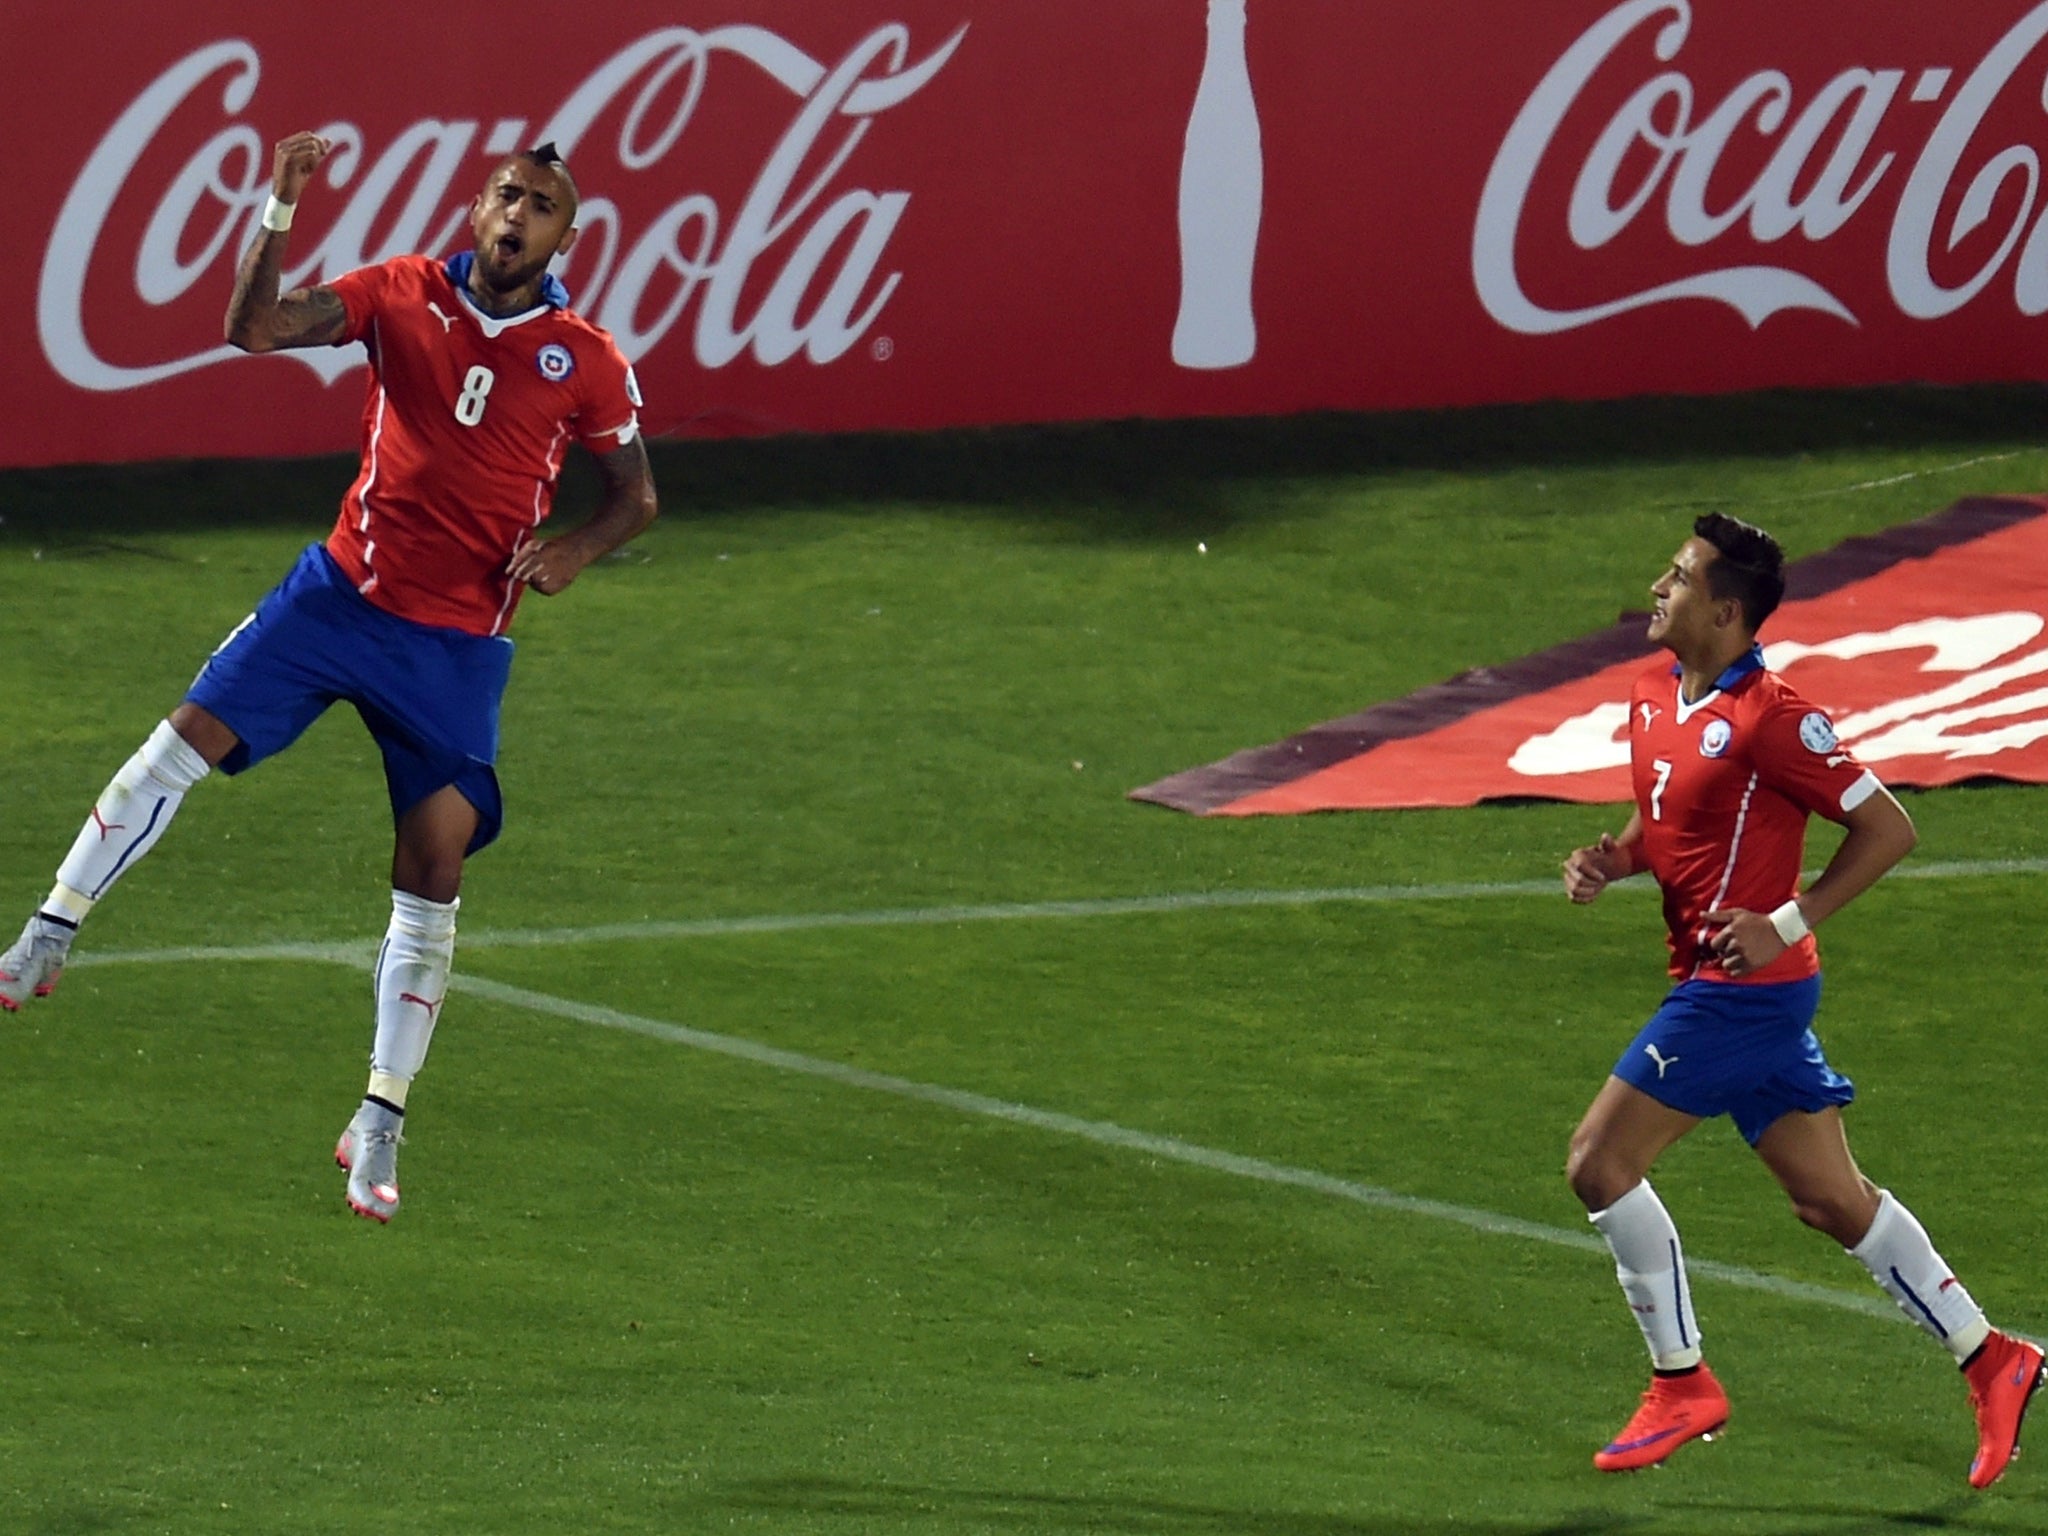 Vidal celebrates with Sanchez after scoring